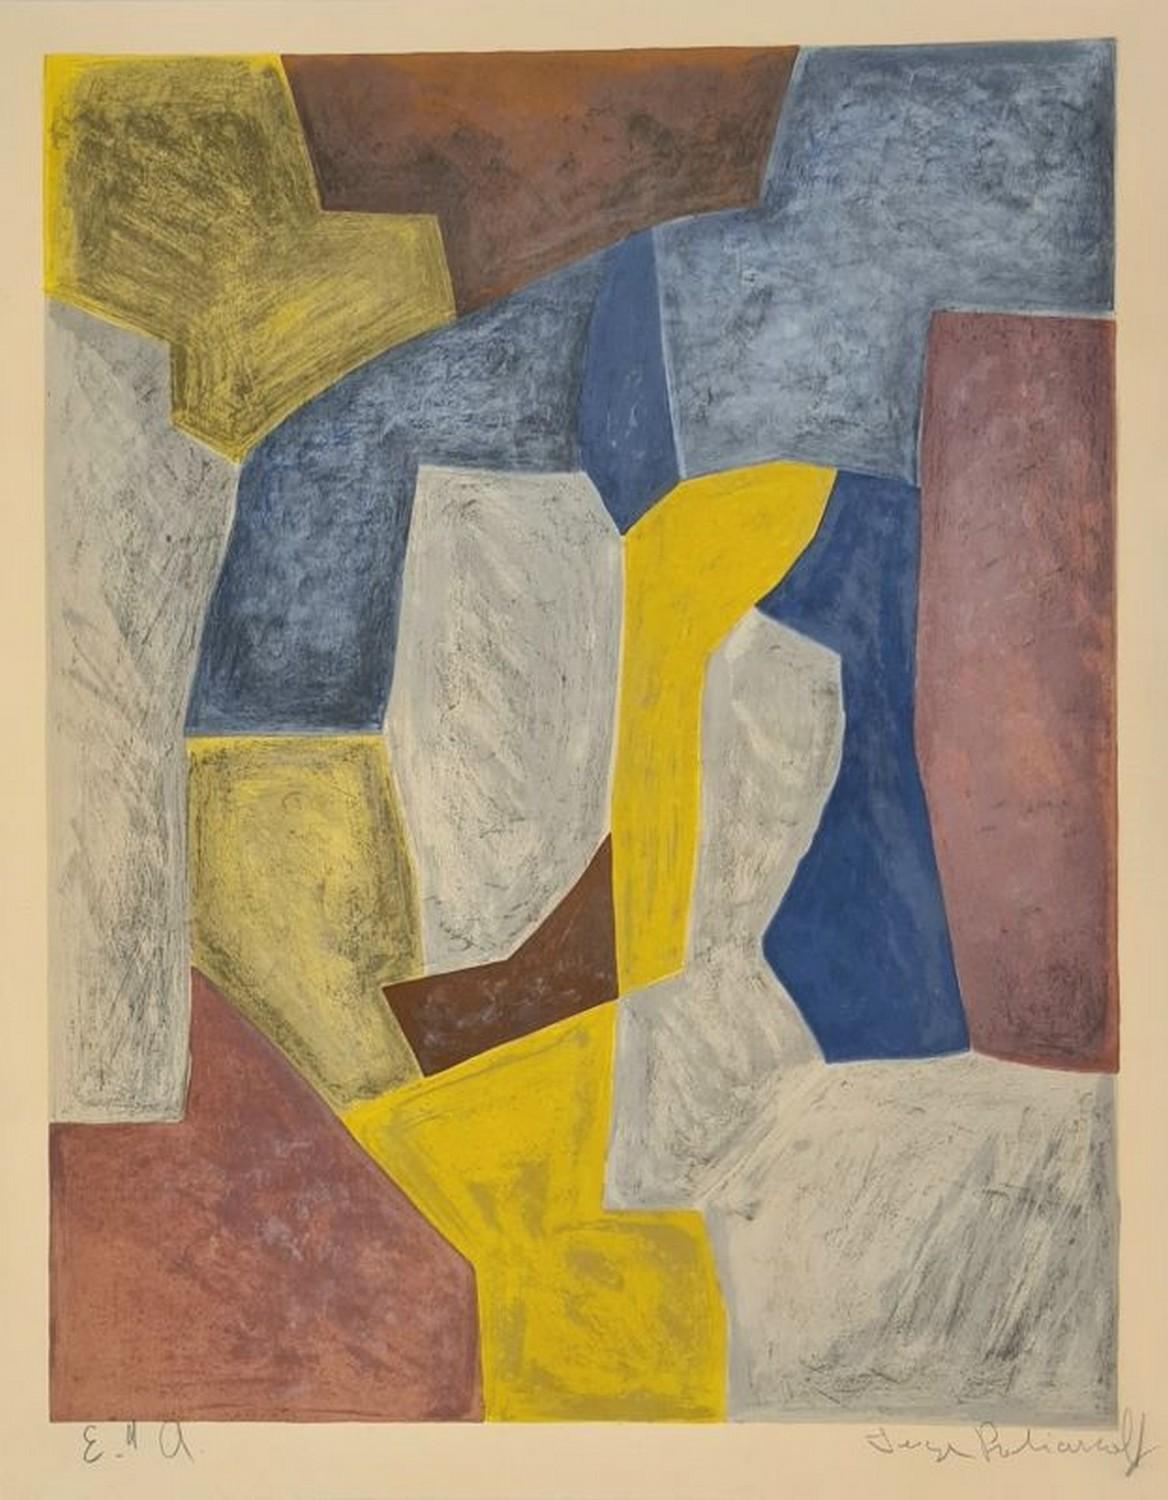 Abstract Print Serge Poliakoff - Composition en carmin, jaune, gris et bleu n°24 